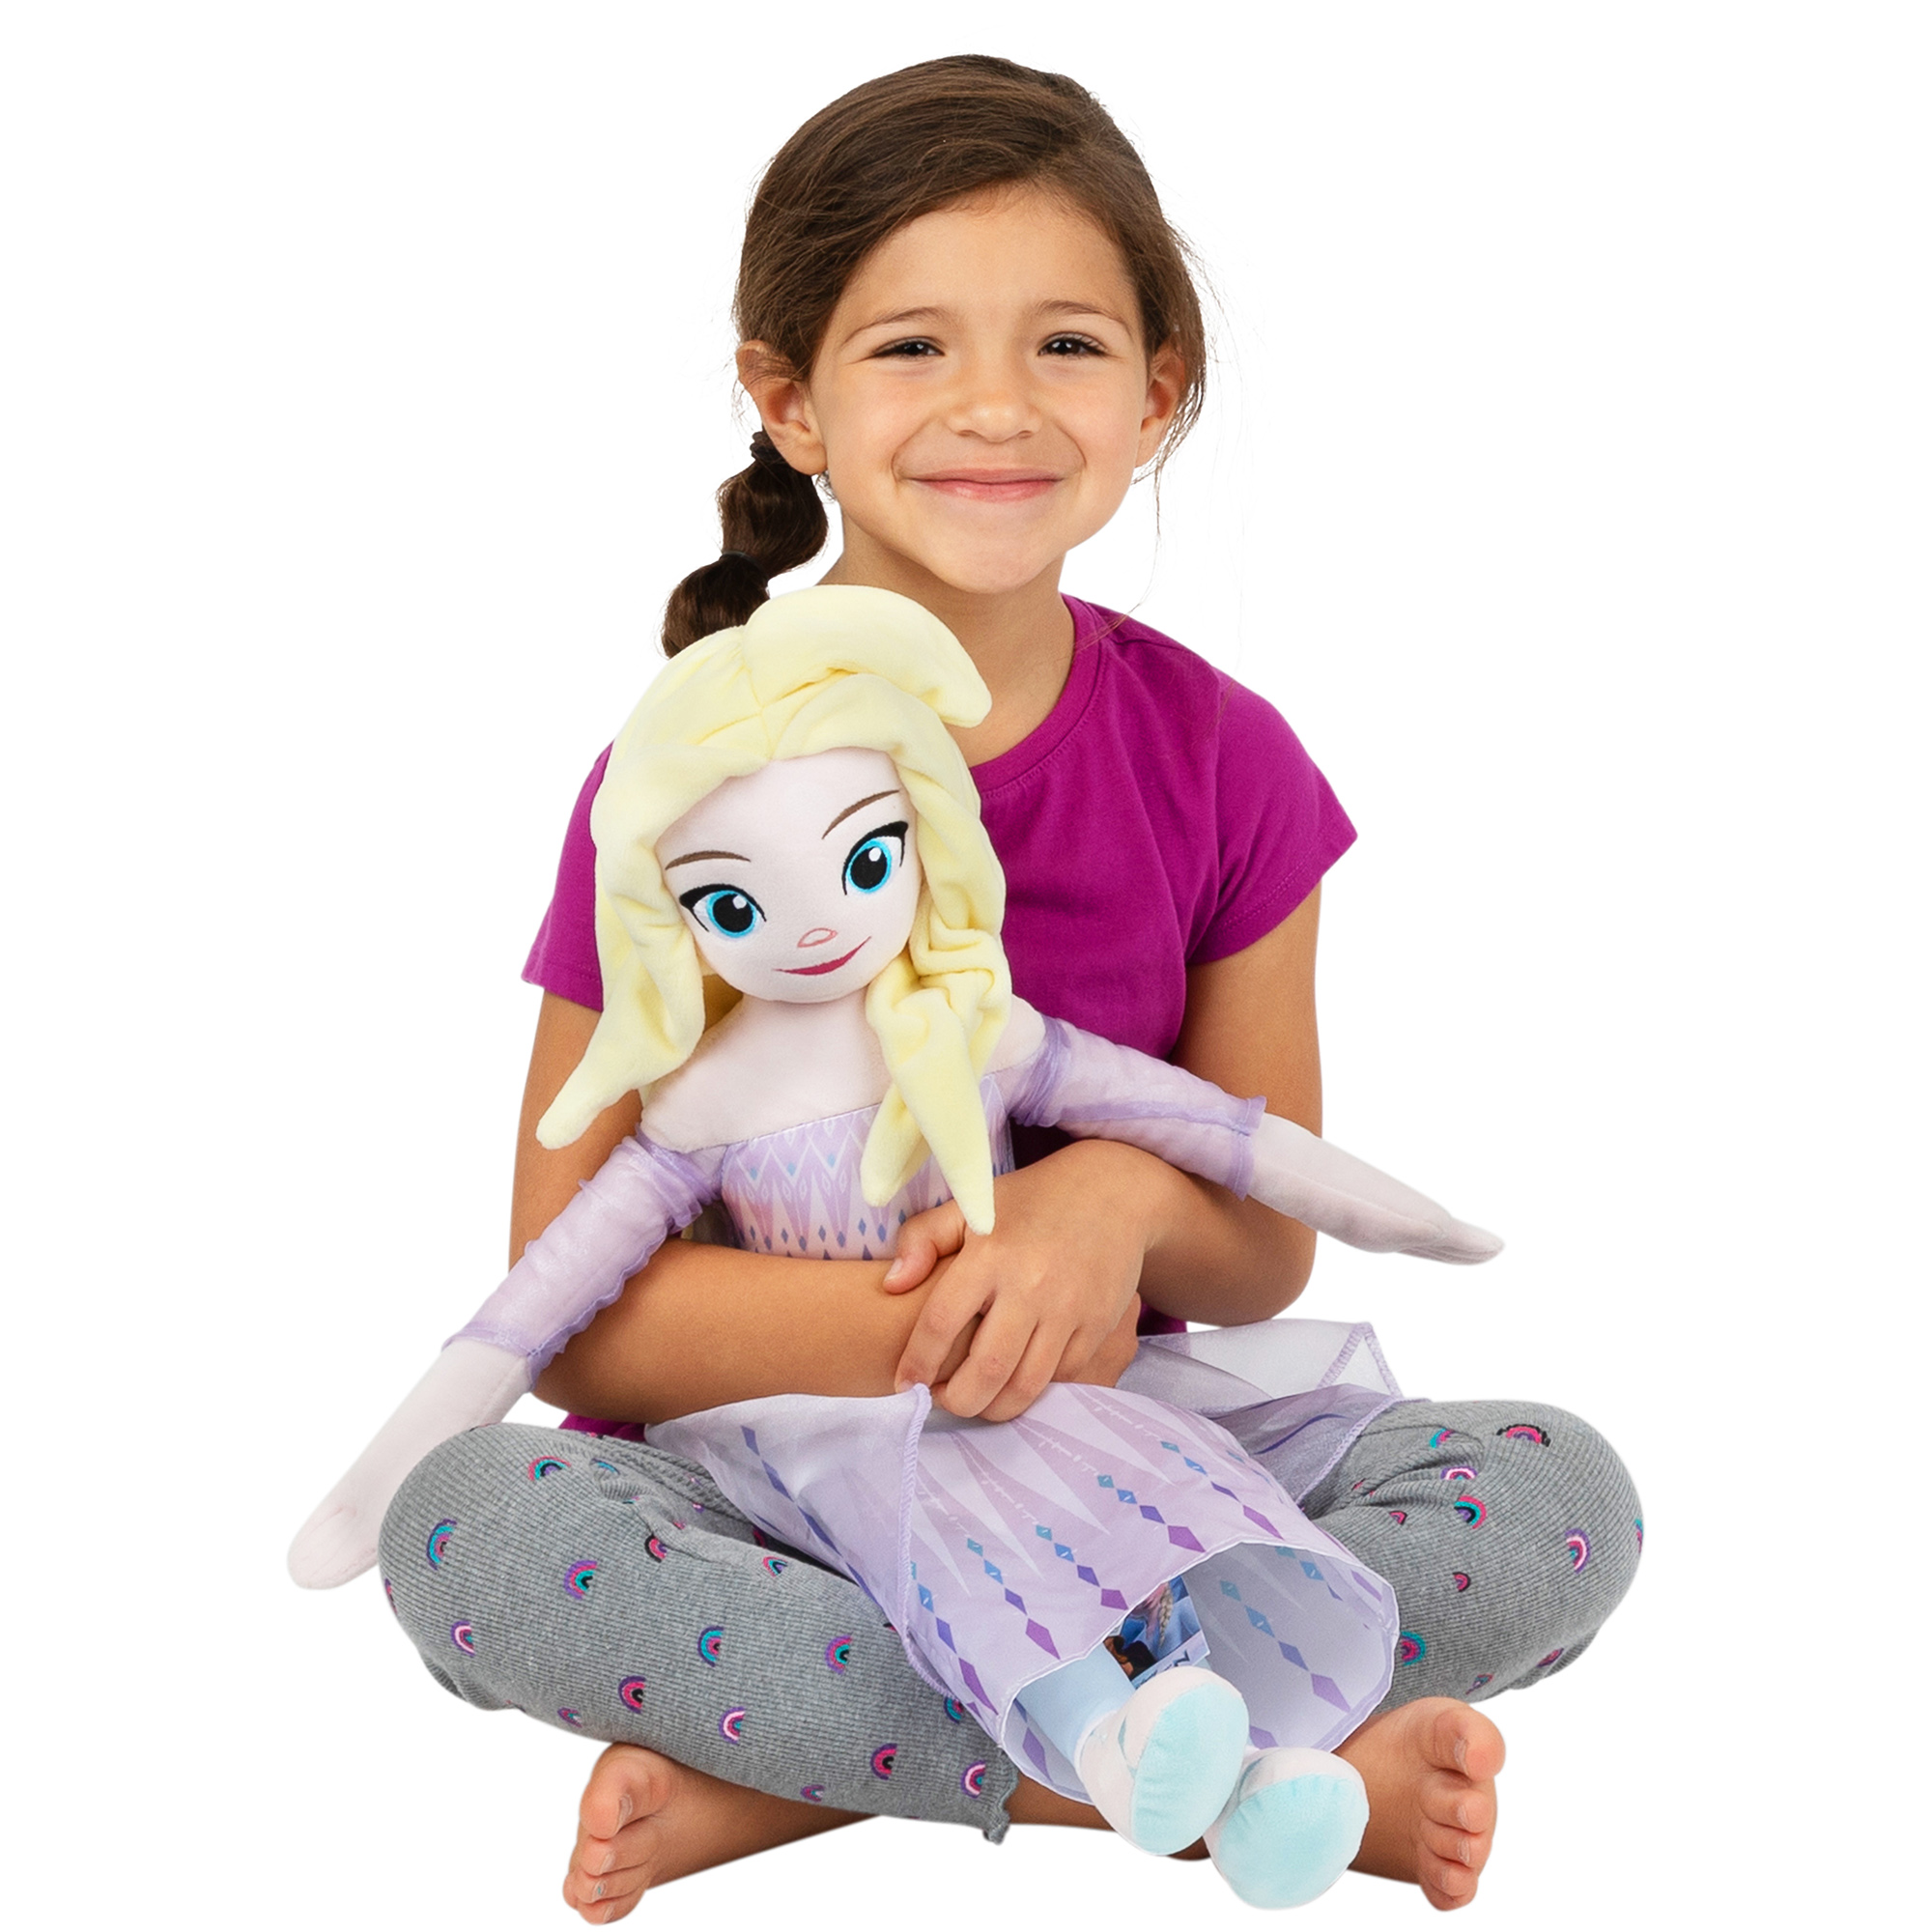 Disney Frozen Kids Elsa Bedding Plush Cuddle and Decorative Pillow Buddy, Purple - image 5 of 7